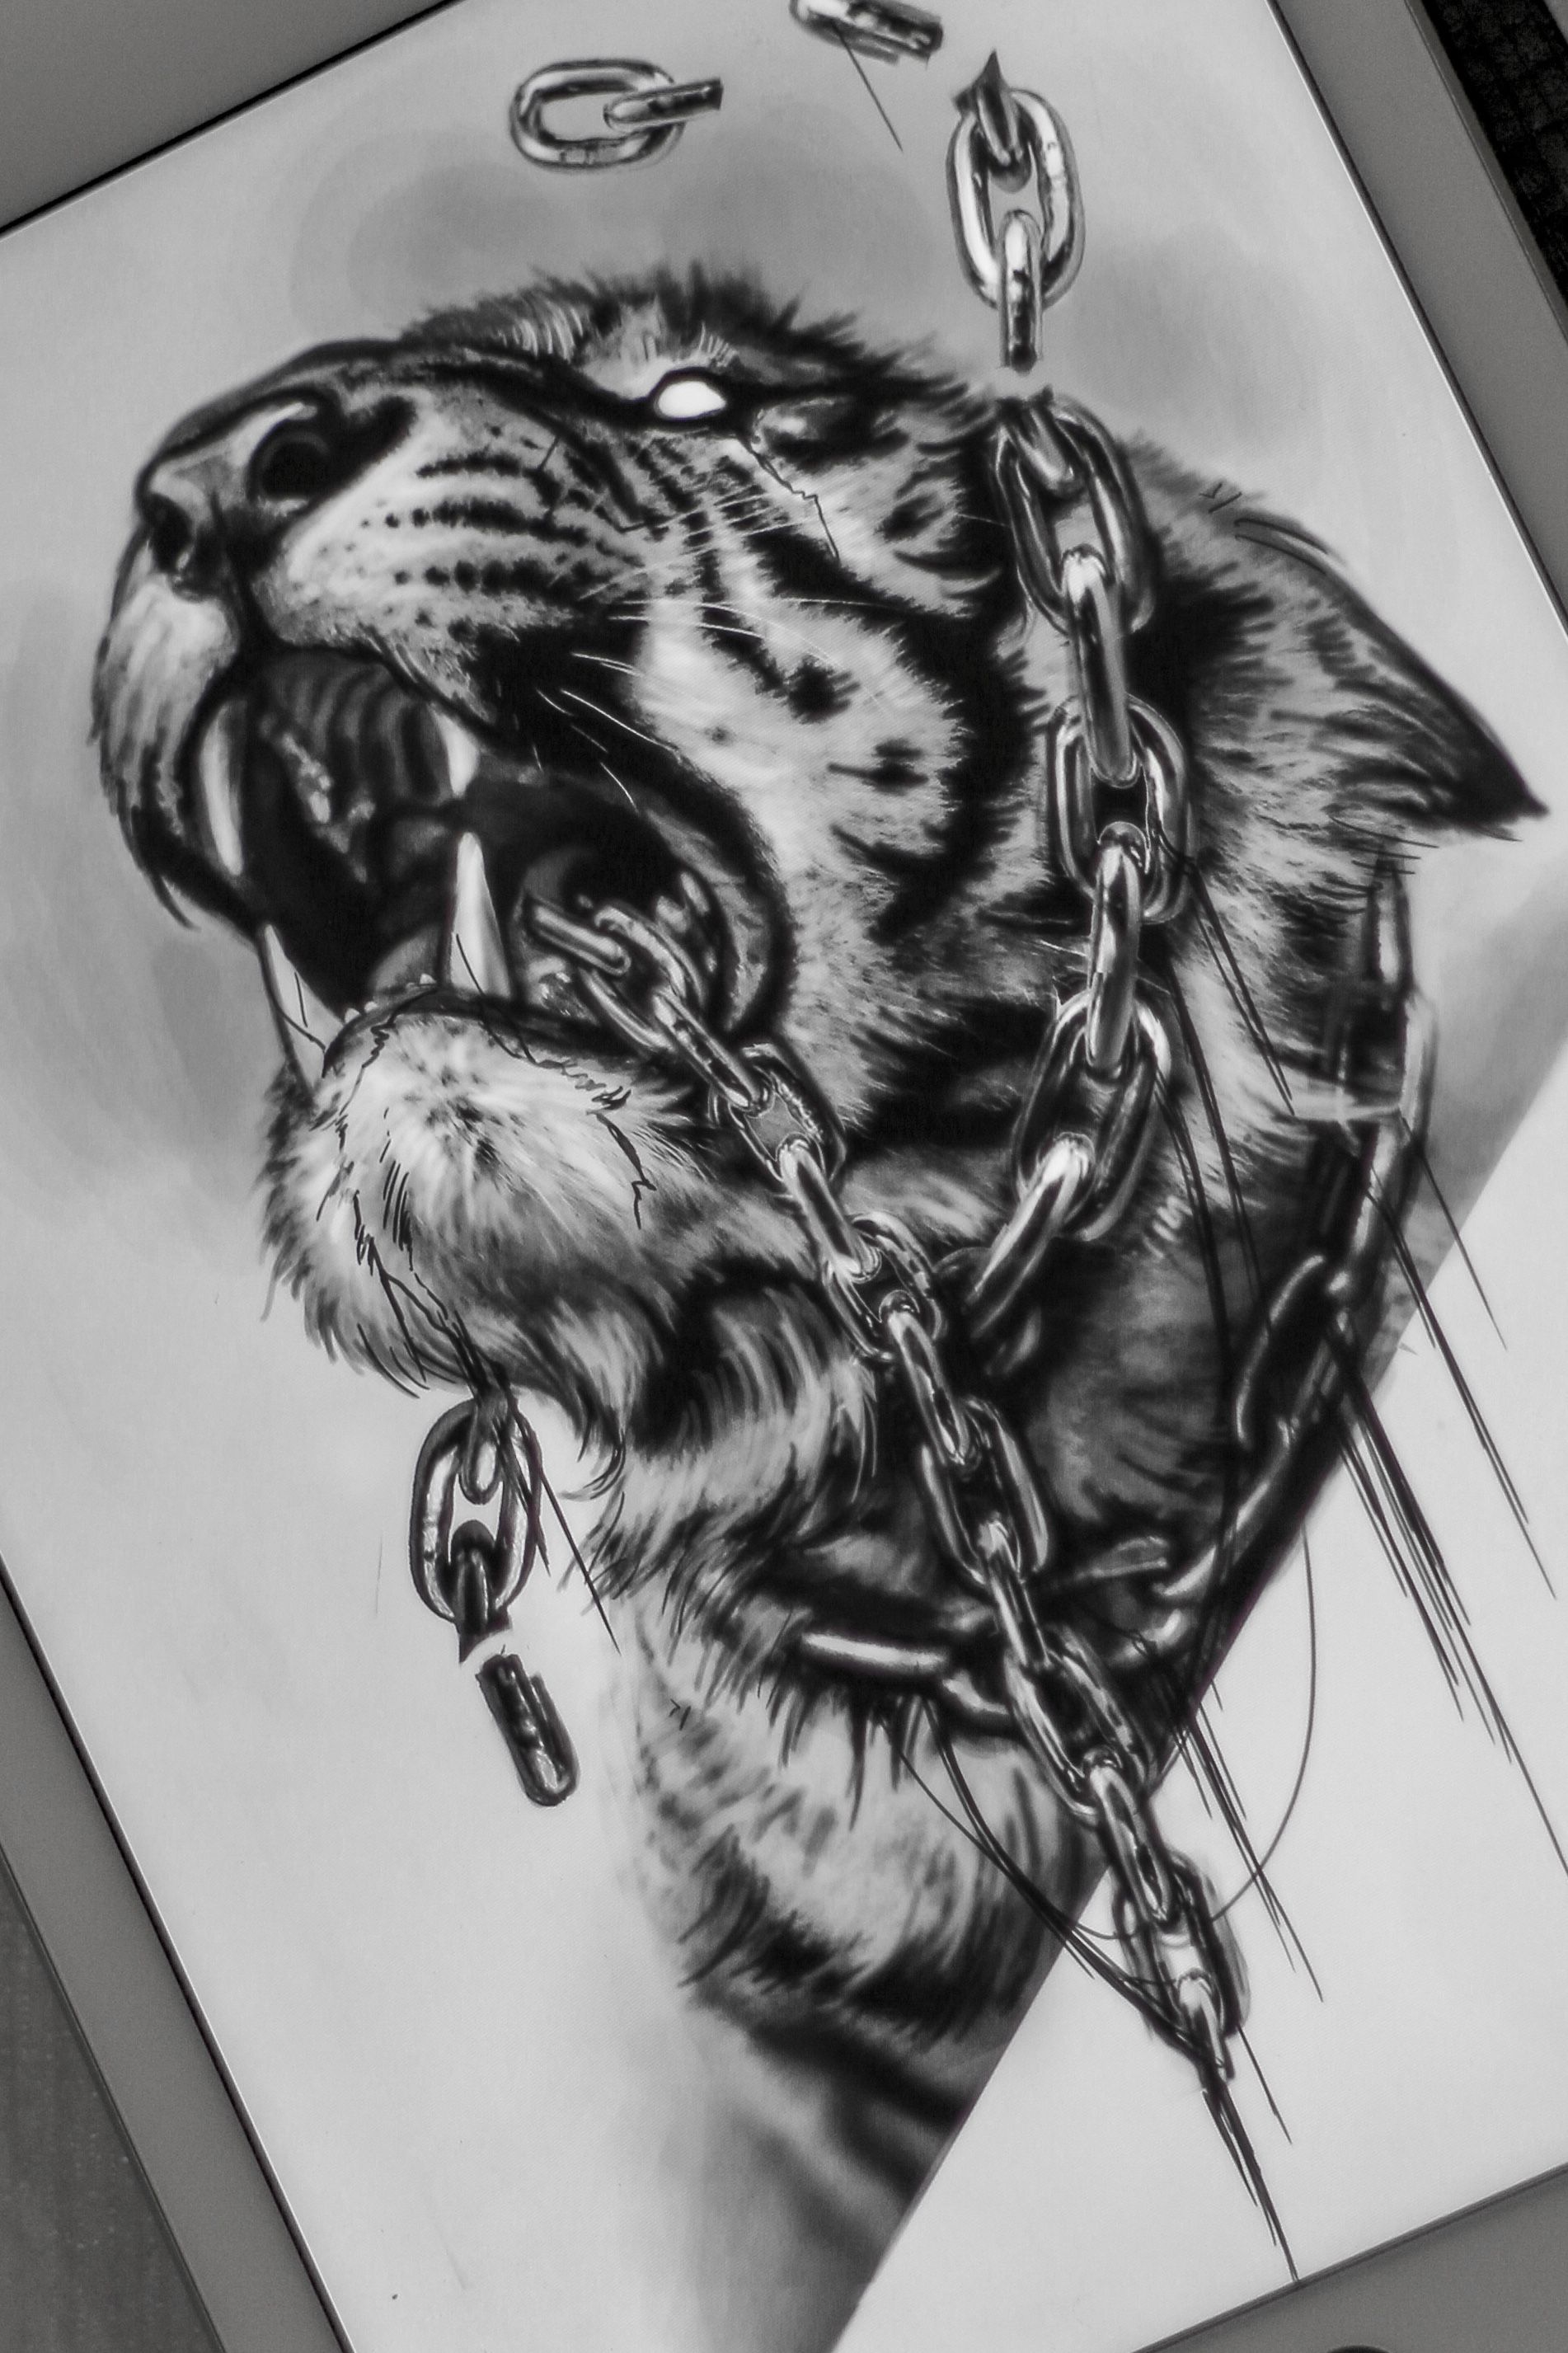 40 Tribal Tiger Tattoo Designs Background Illustrations RoyaltyFree  Vector Graphics  Clip Art  iStock